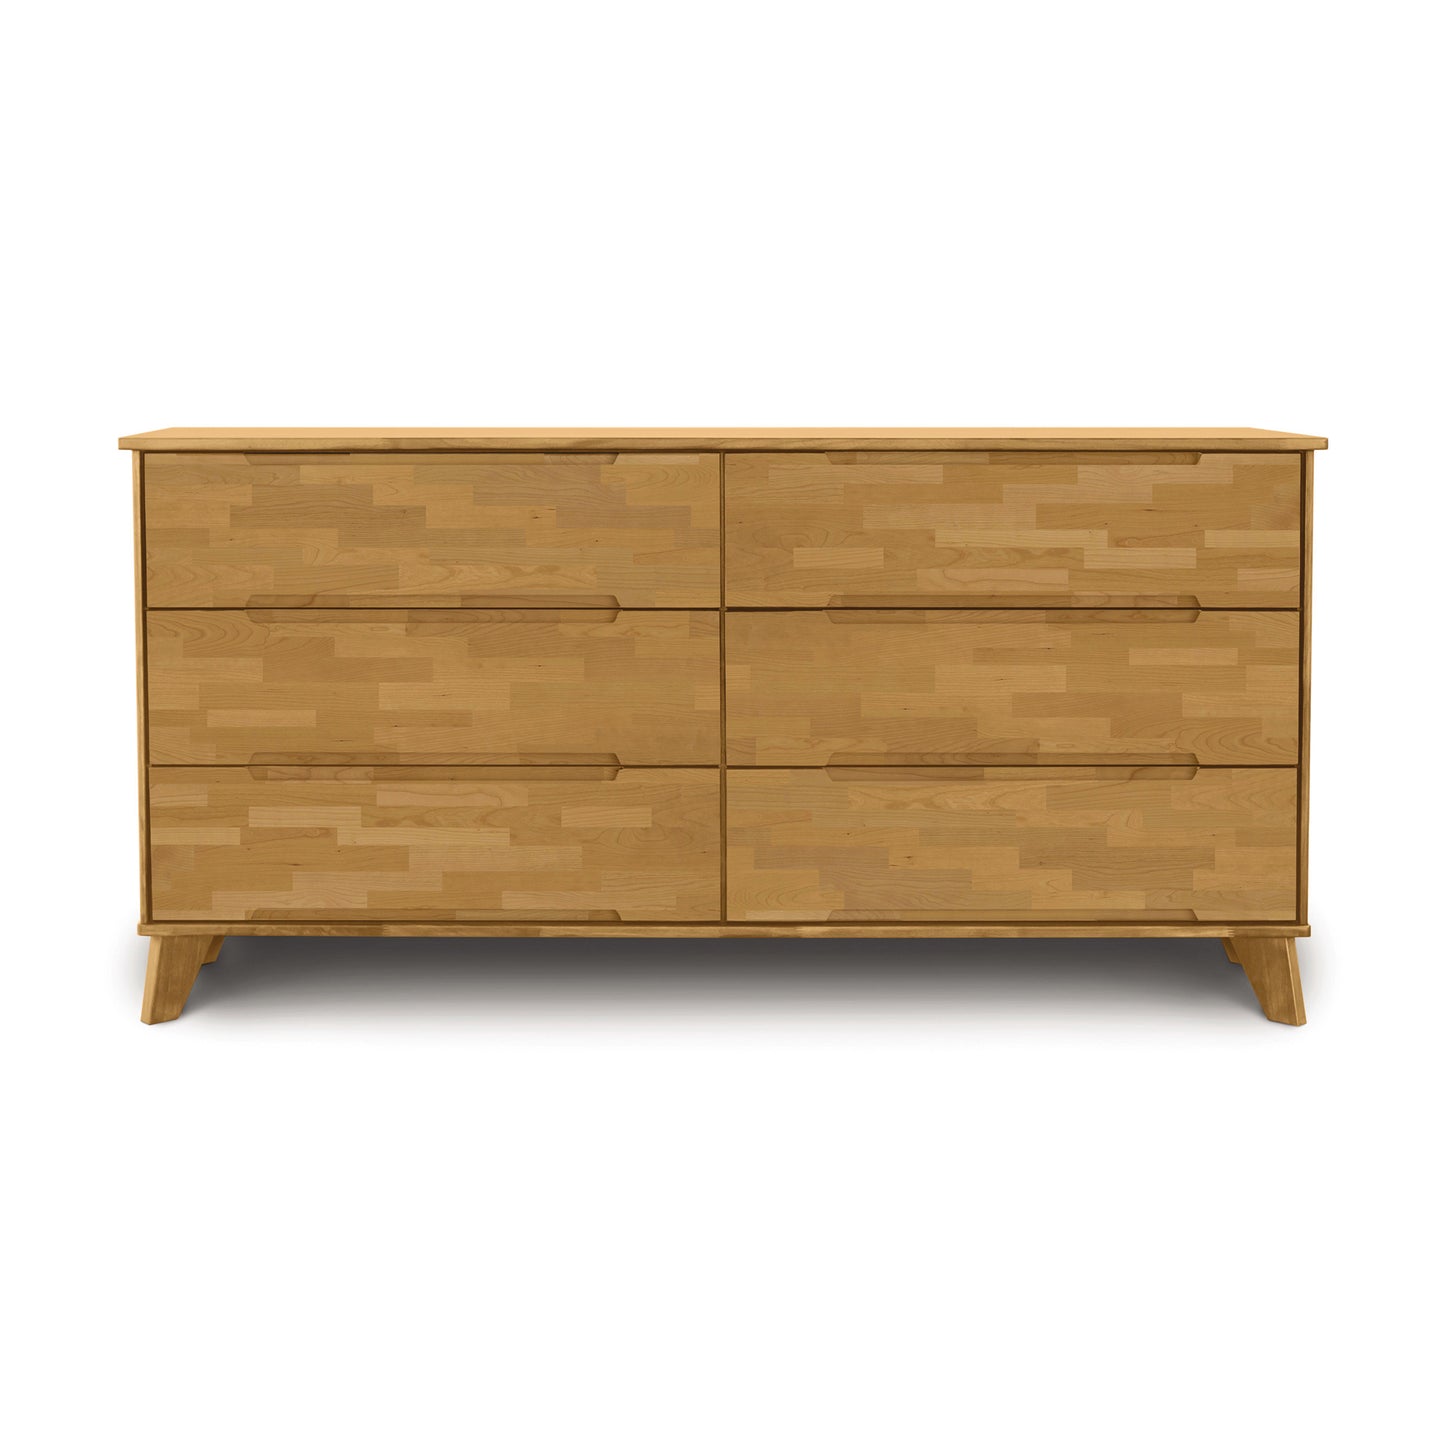 A Copeland Furniture Linn 6-Drawer Dresser on a white background.